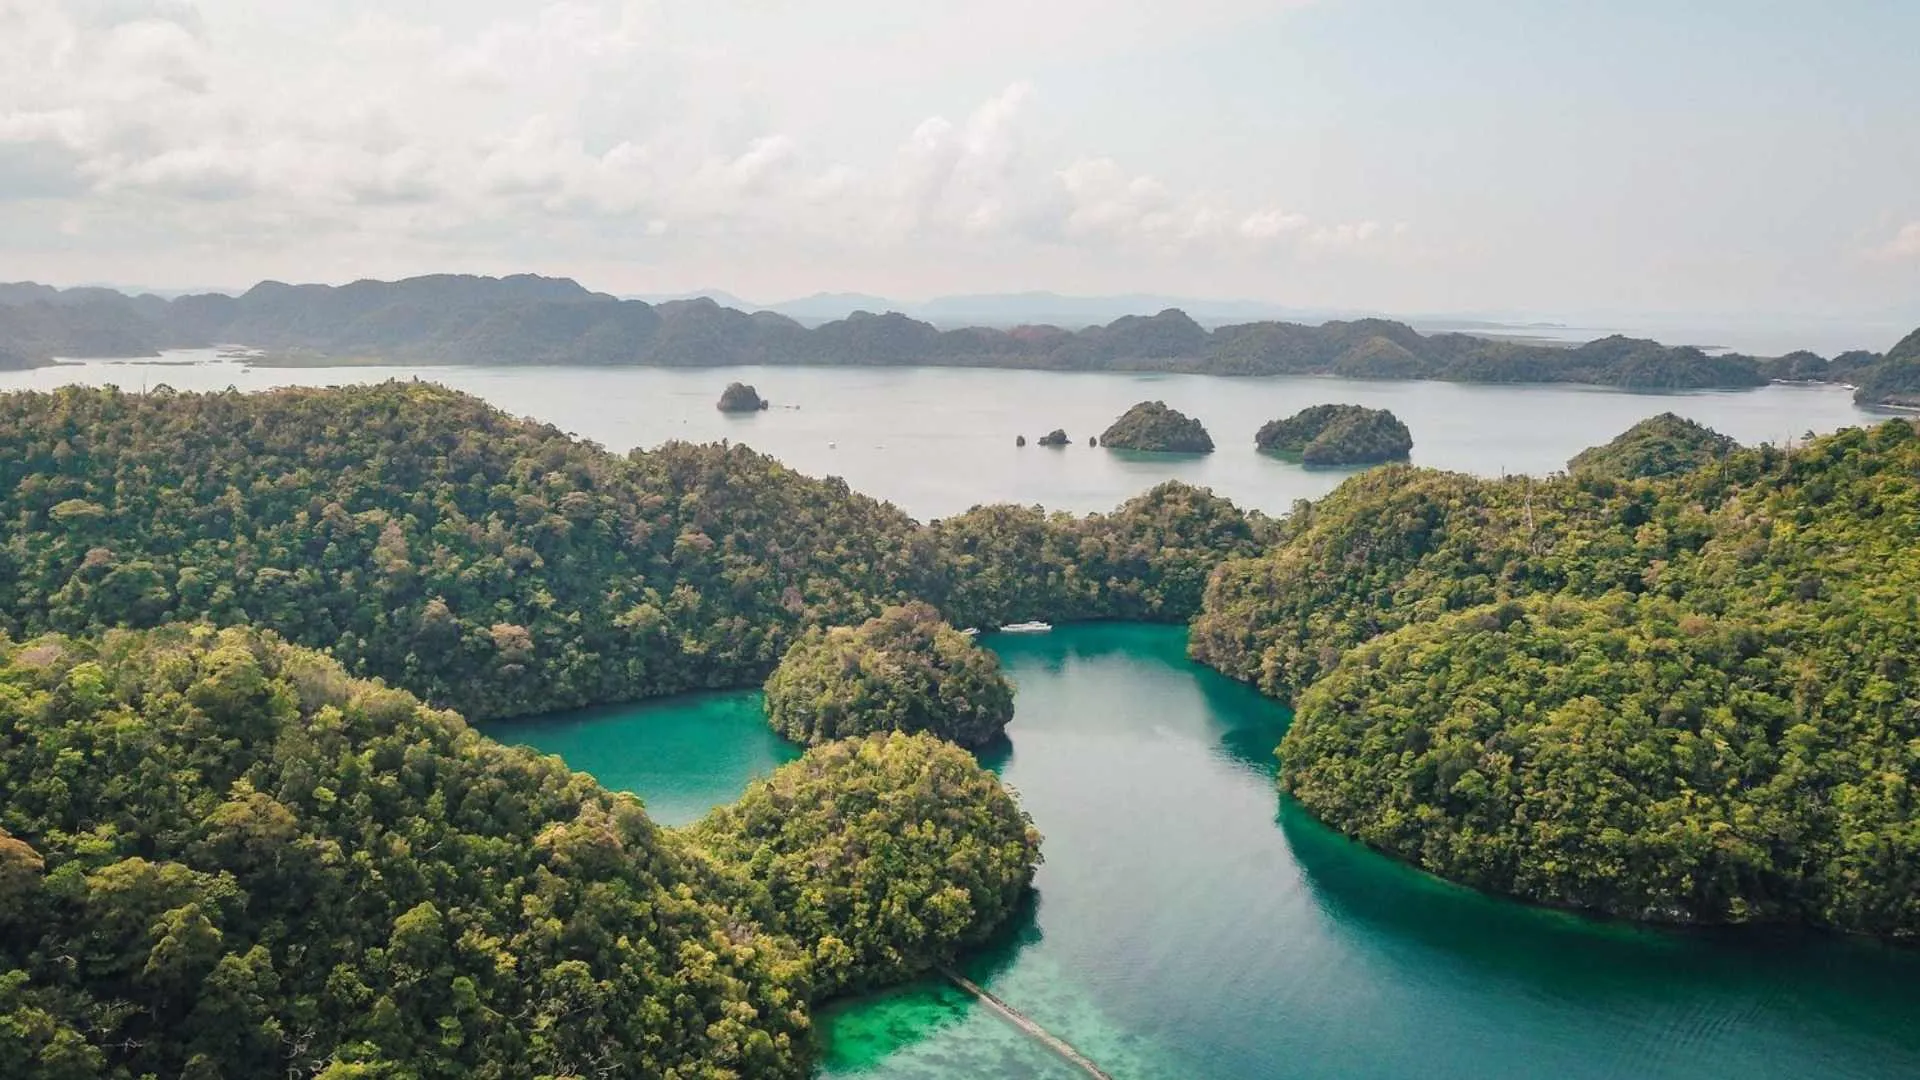 Siargao Island, the Philippines - beautiful islands